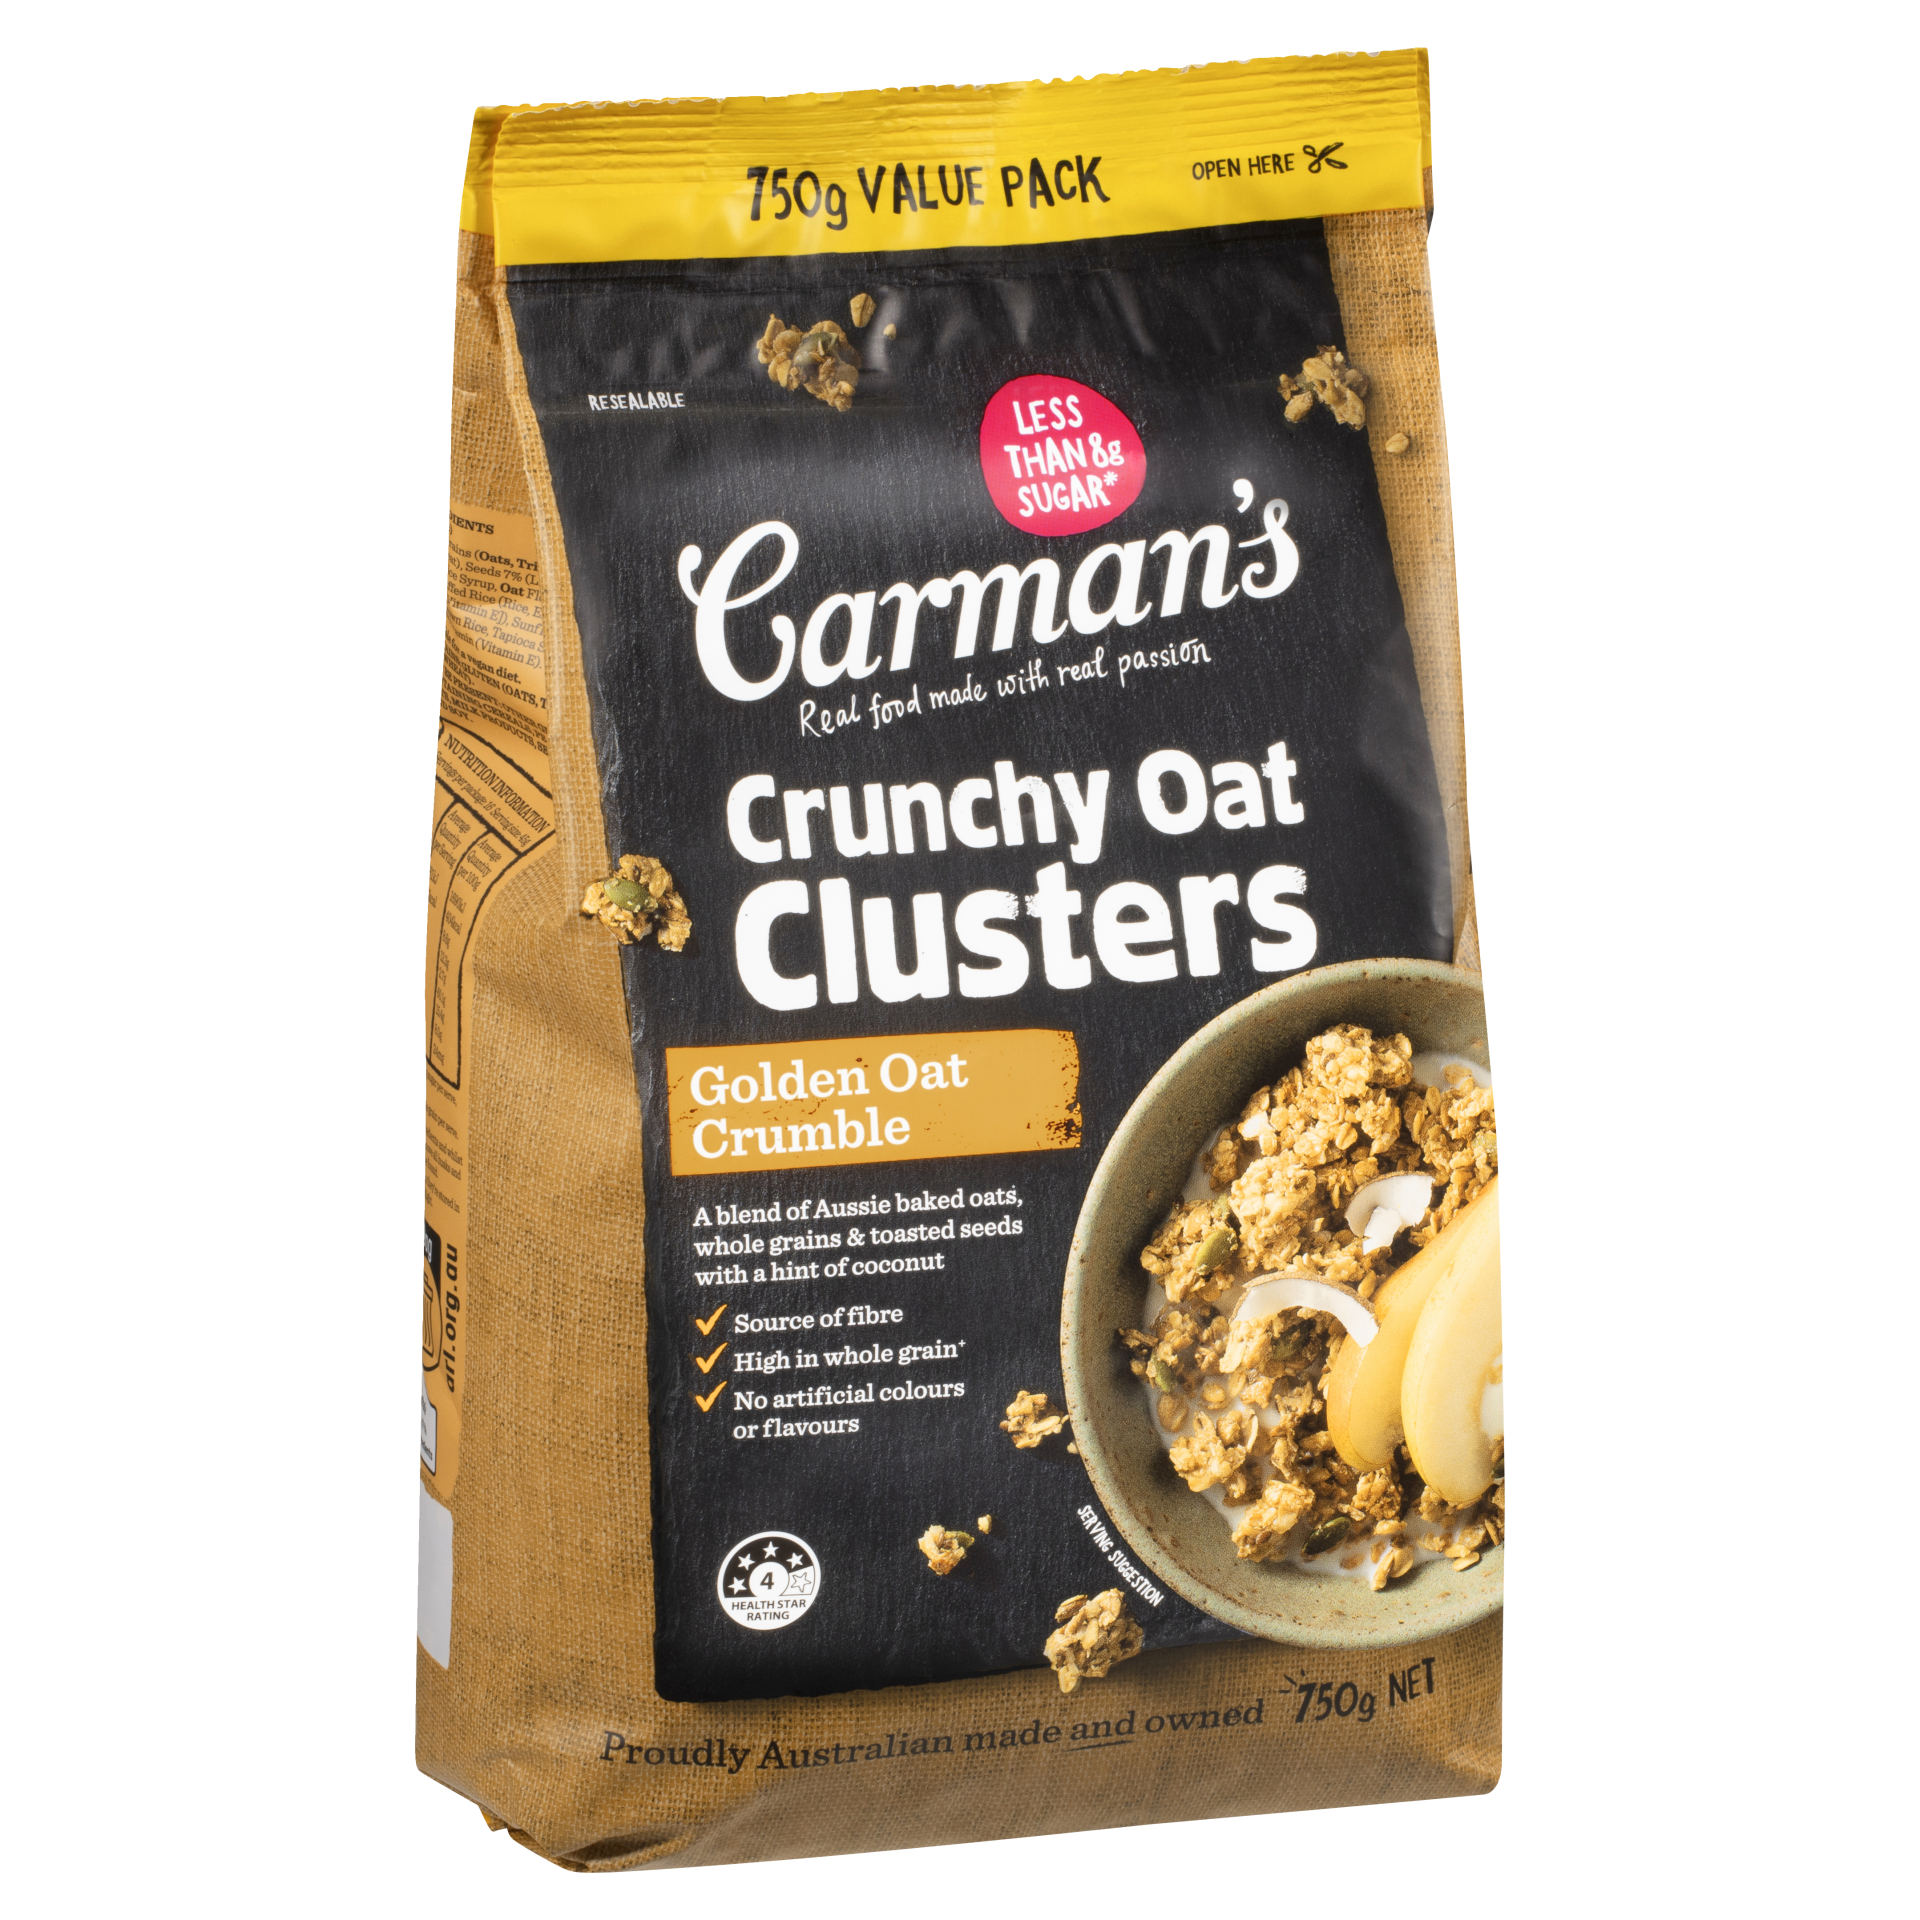 Golden Oat Crumble Crunchy Oat Clusters Value Pack